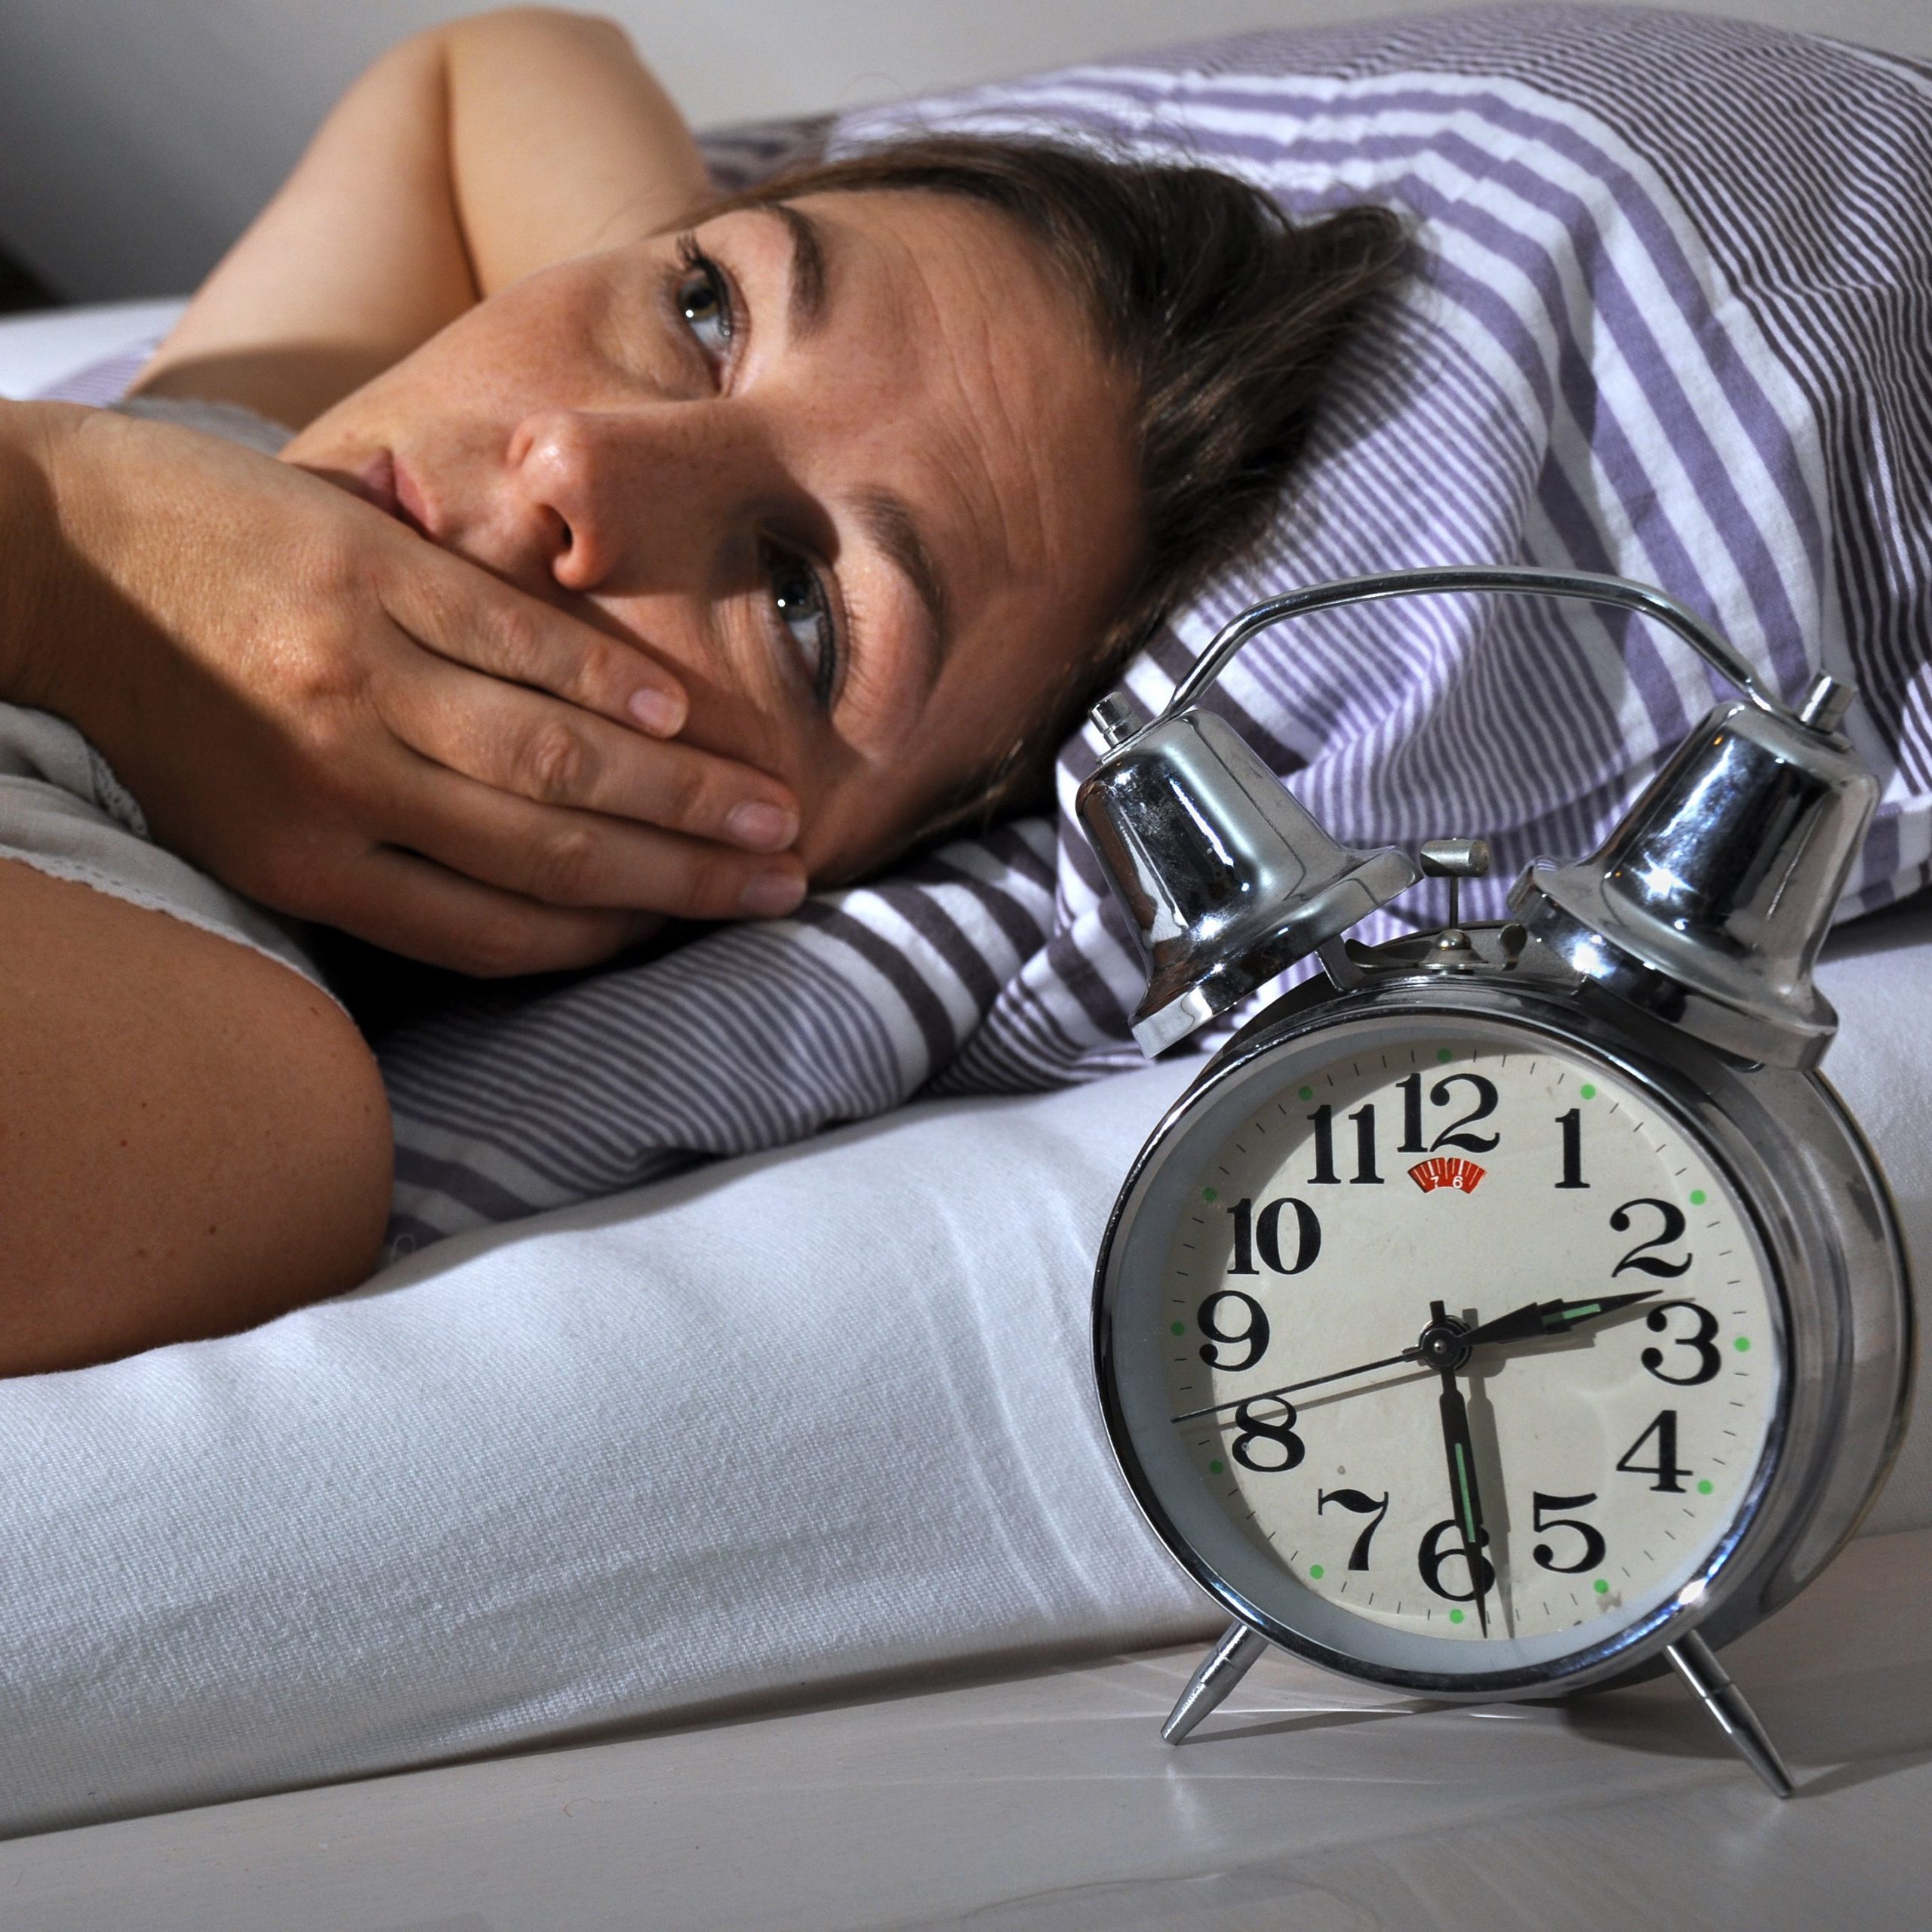 I Can’t Sleep: Sleep Problems From Brain Injury?